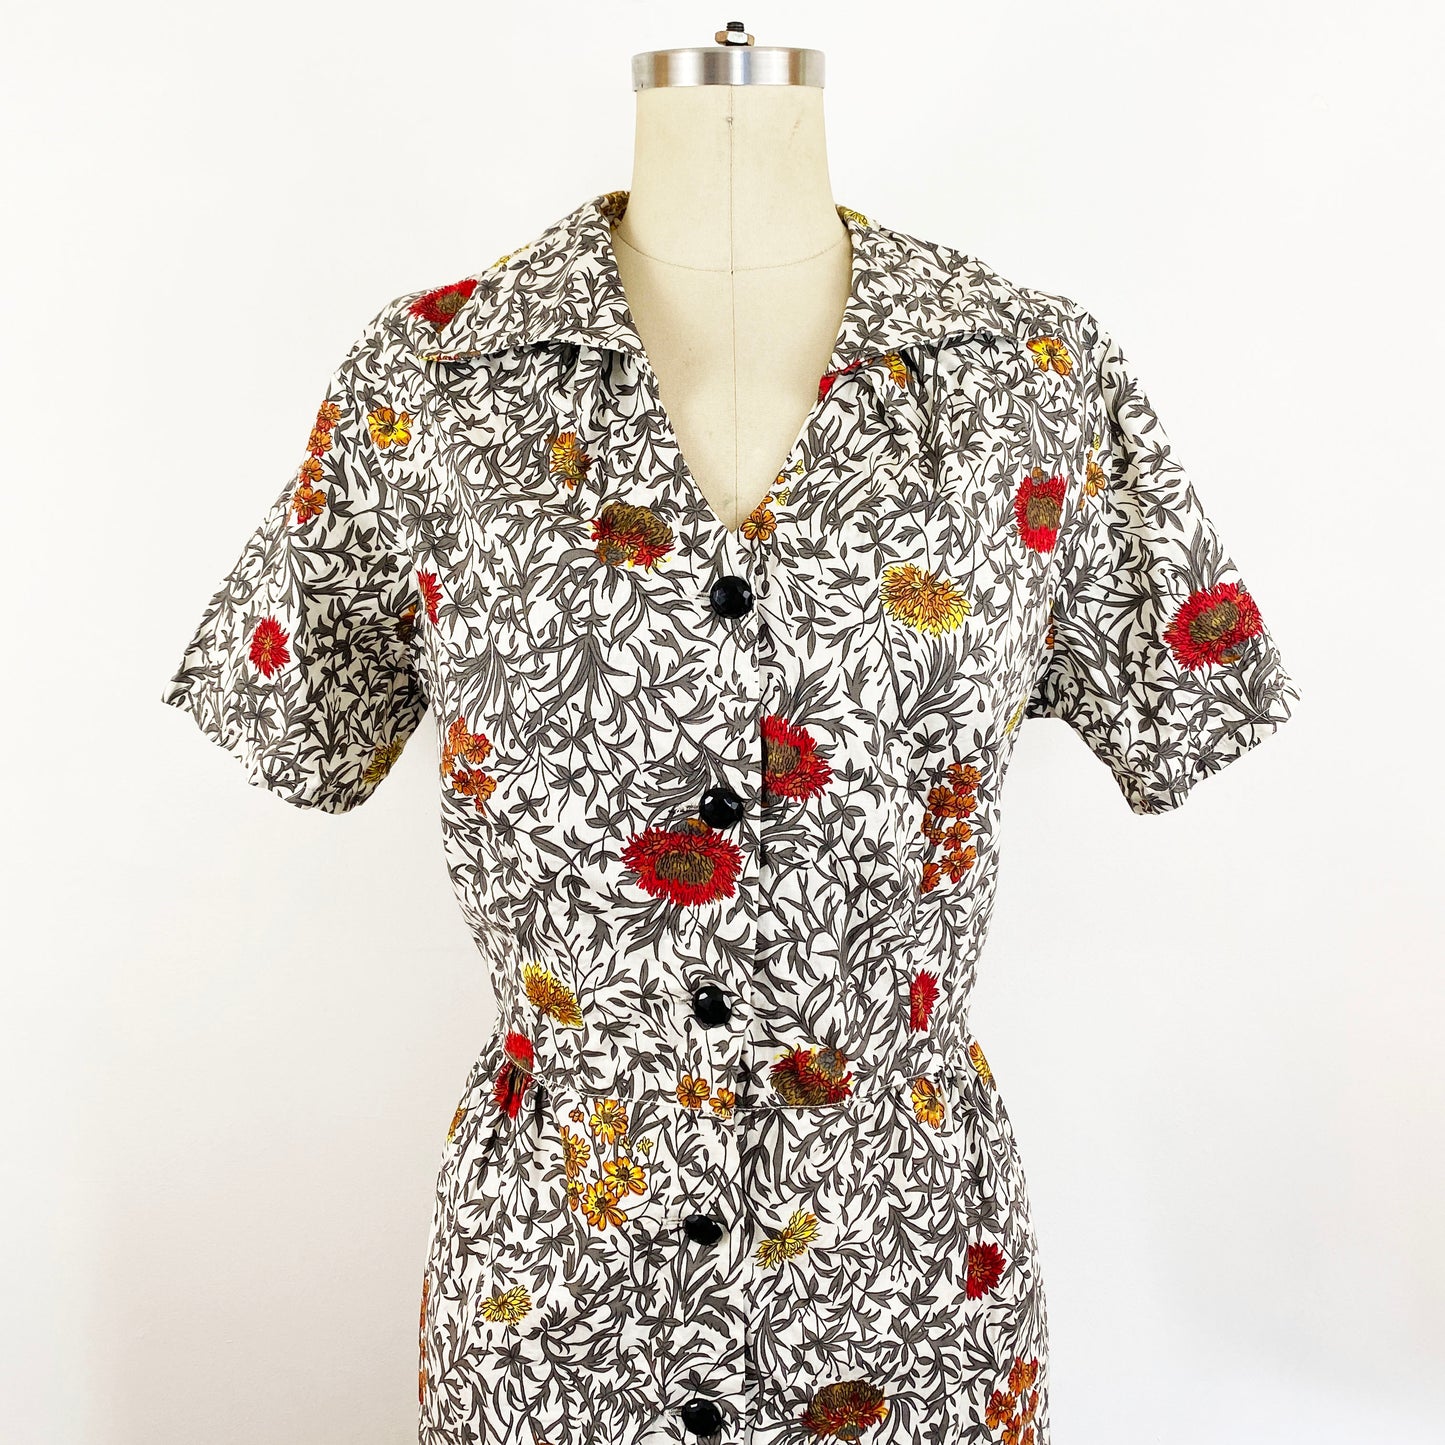 1950s Kenrose Cotton Autumn Floral White and Gray Cotton A-line Shirt Dress Day Dress / Vintage Plus Size 0X 14/16